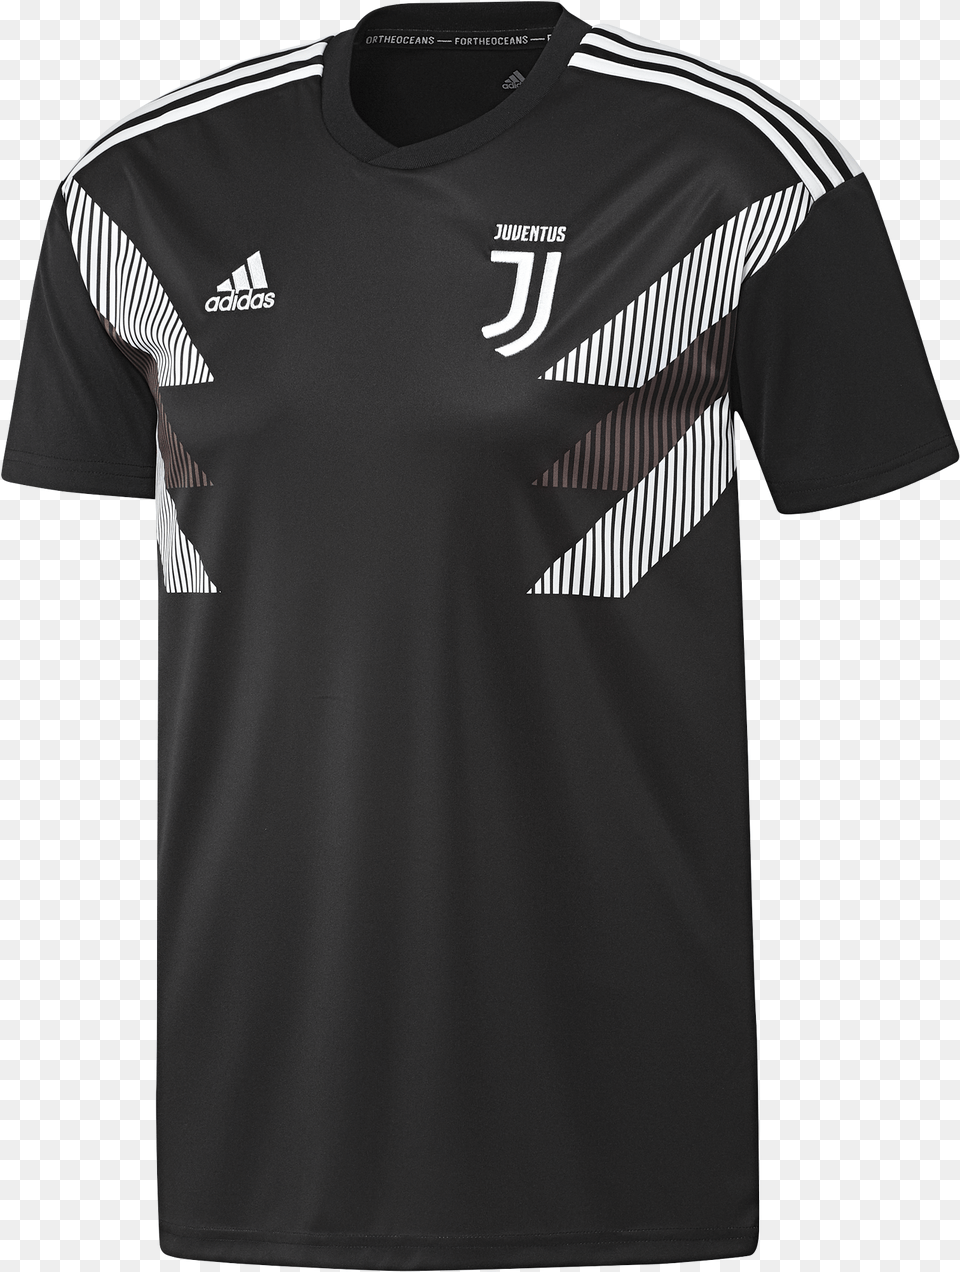 Login Into Your Account Juventus Camiseta Blanco Y Negro, Clothing, Shirt, T-shirt, Jersey Png